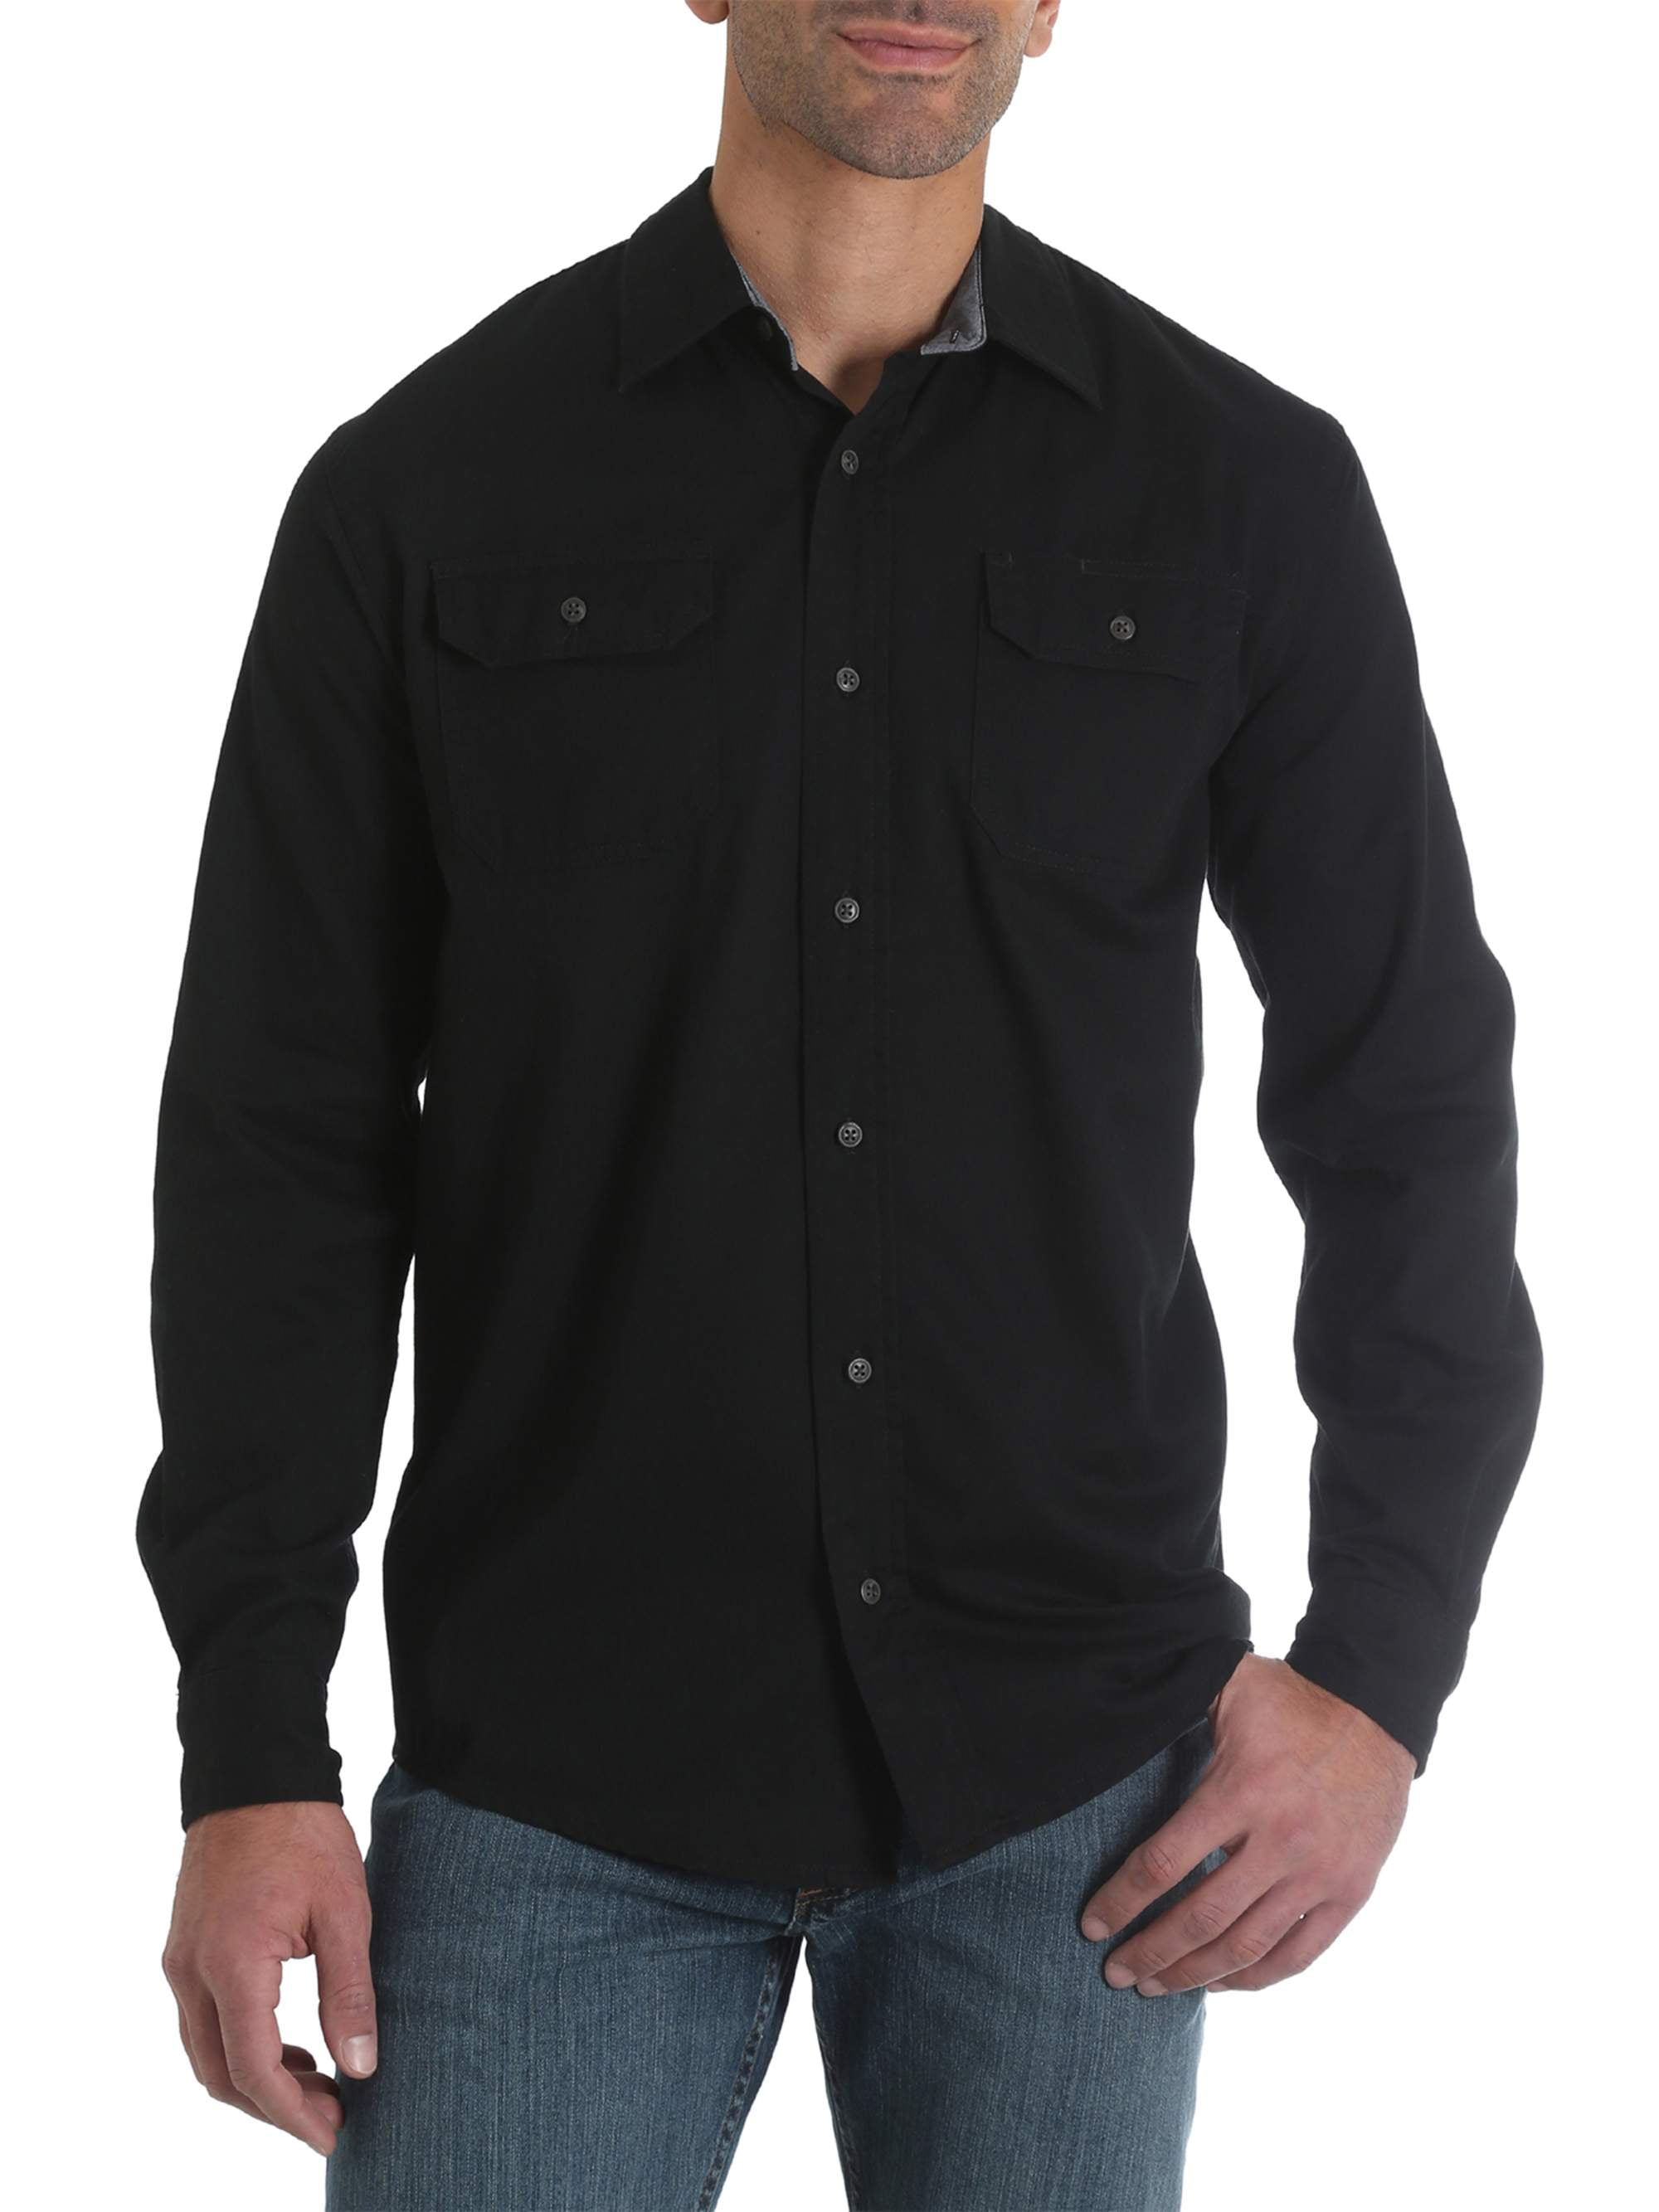 Men's Long Sleeve Stretch Twill Shirt - Walmart.com